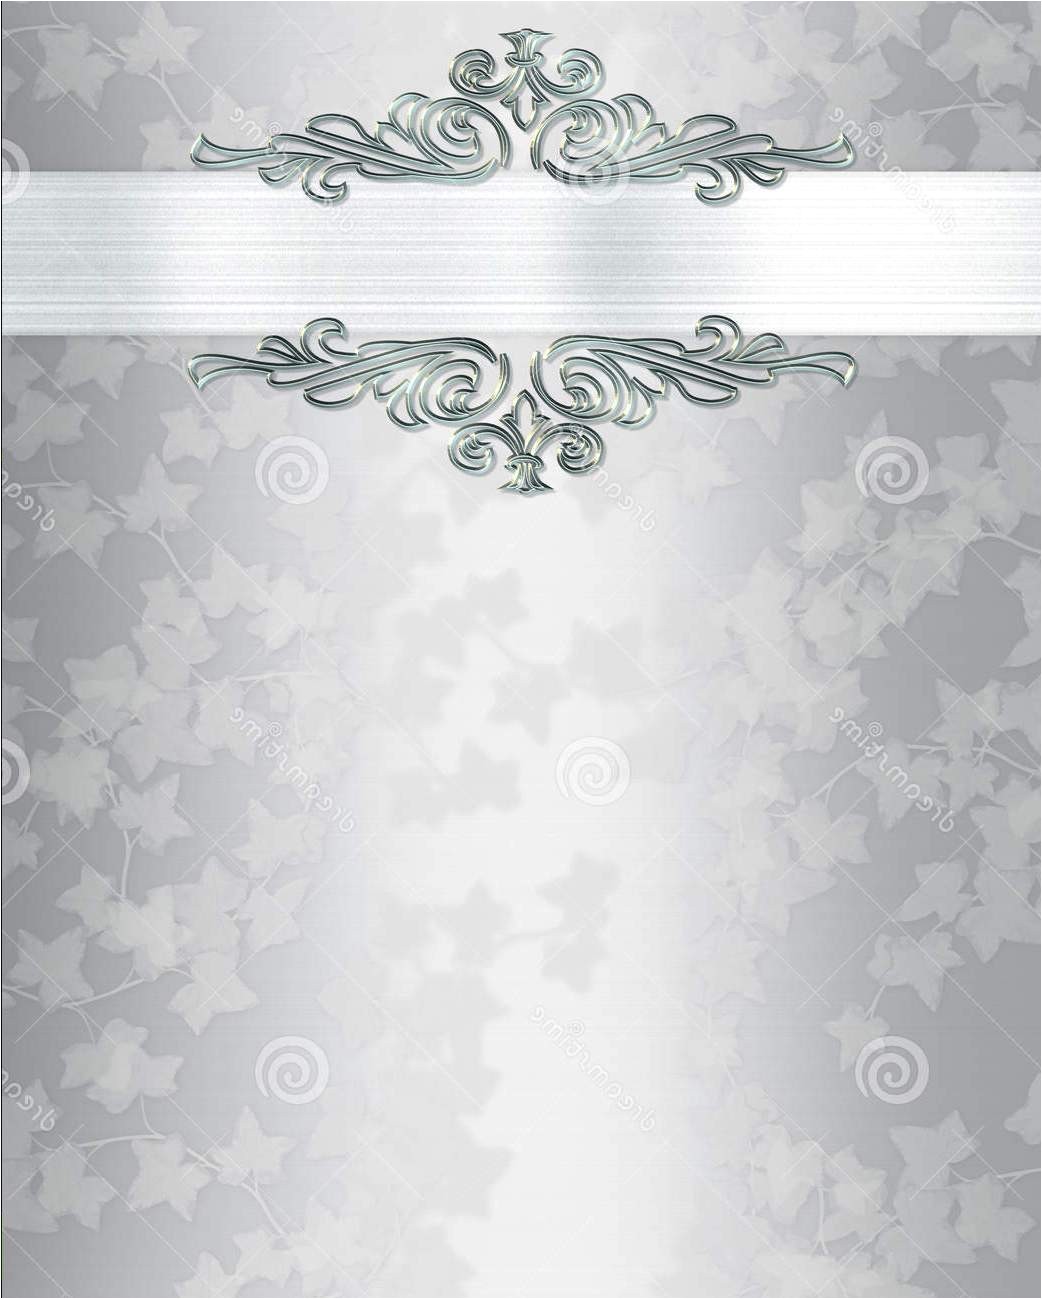 blank wedding invitations for simple invitations of your wedding invitation templates using enchanting design ideas 15